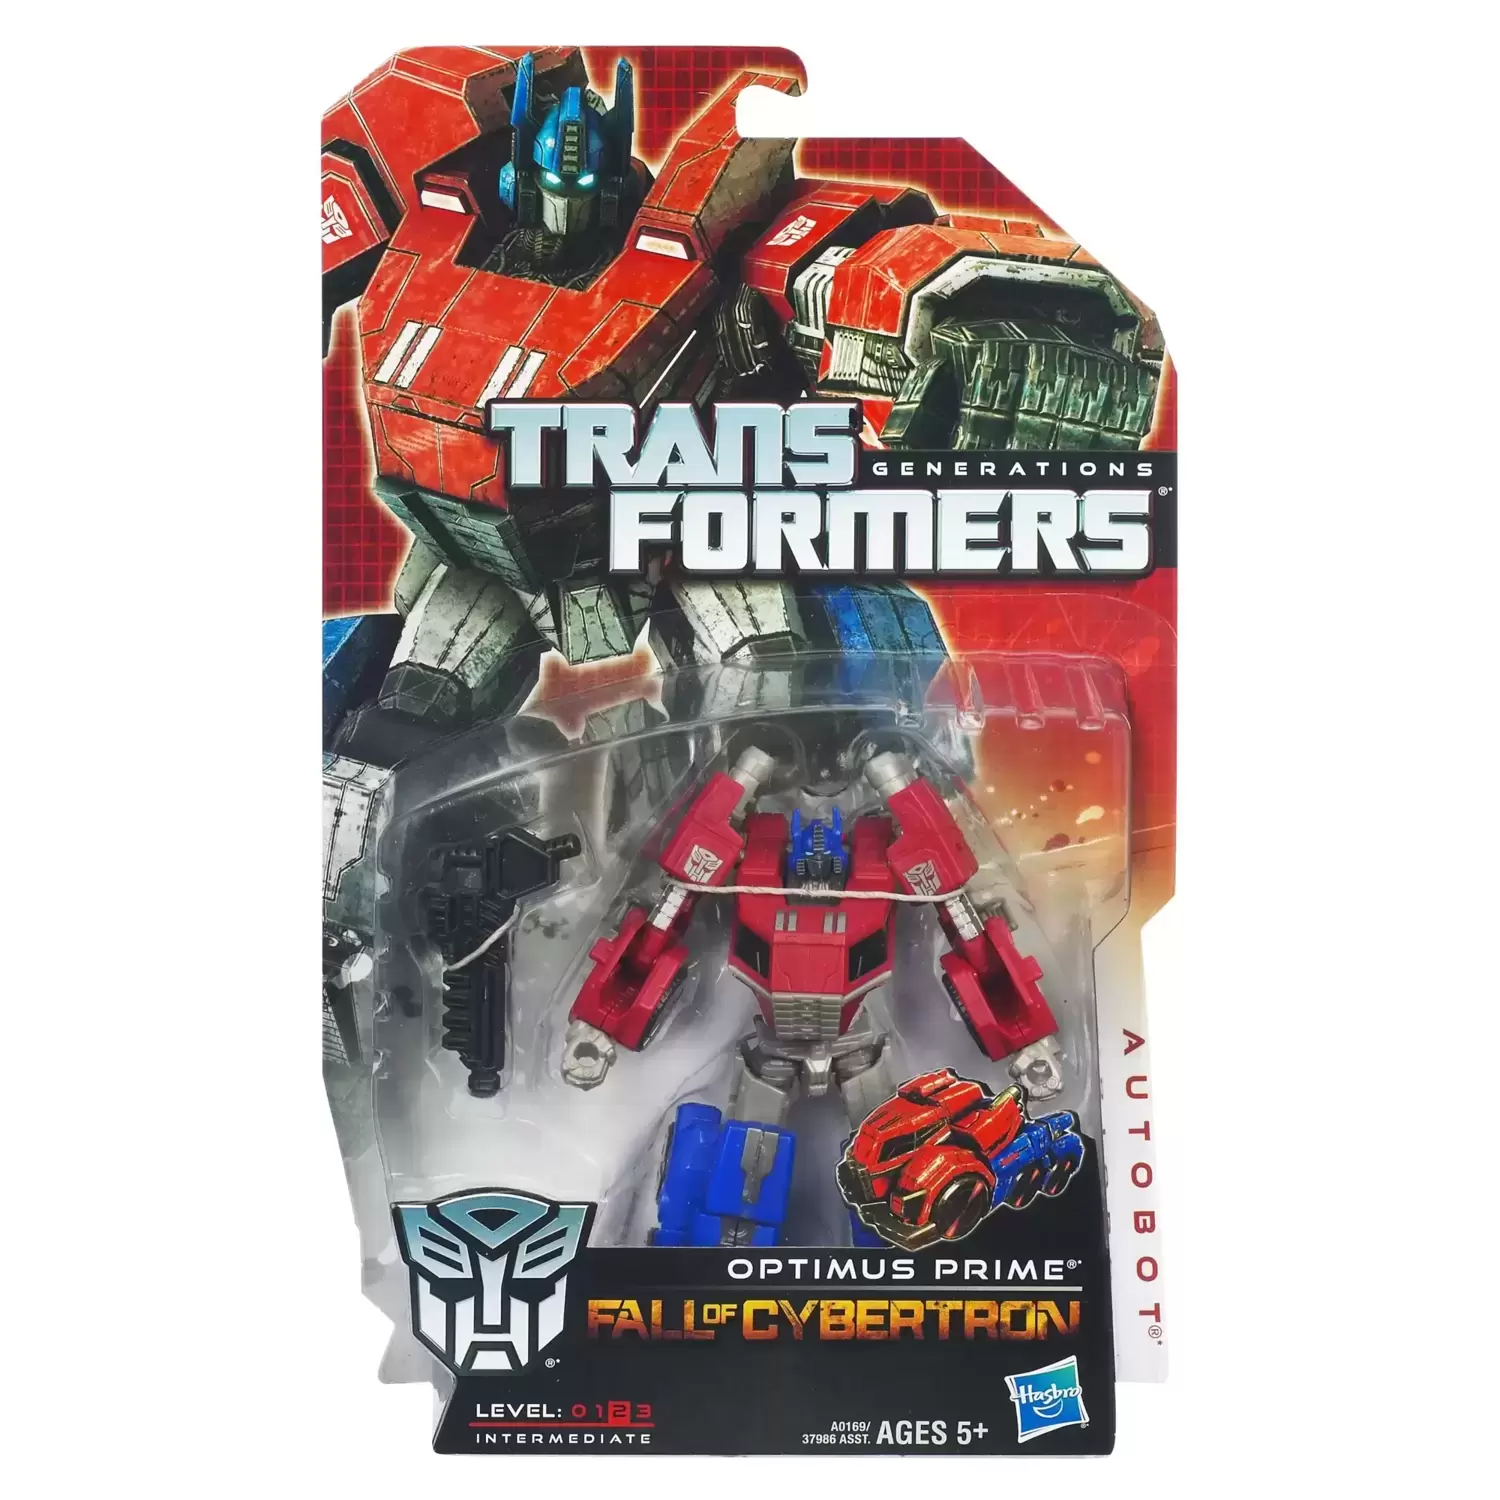 Fall of Cybertron - Transformers Generation - Optimus Prime